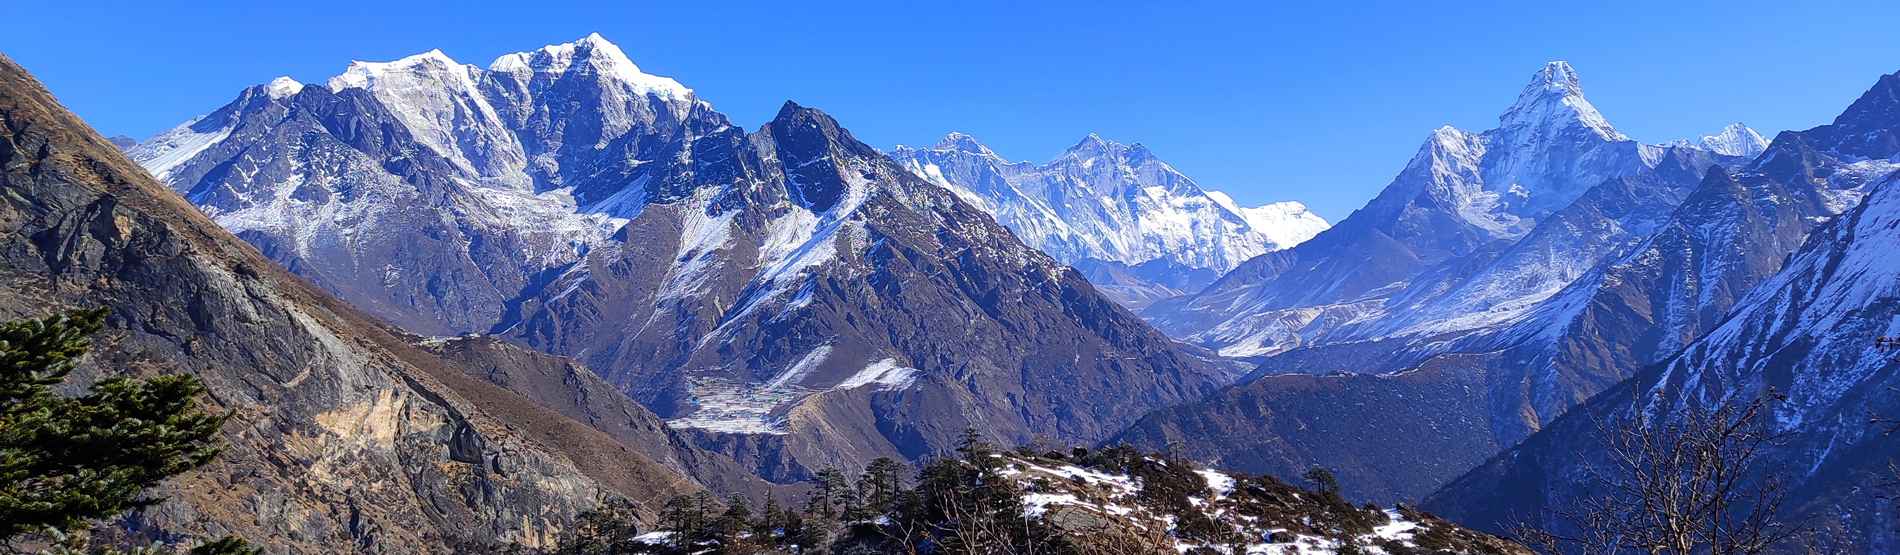 Everest Panorama Trek -9 Days